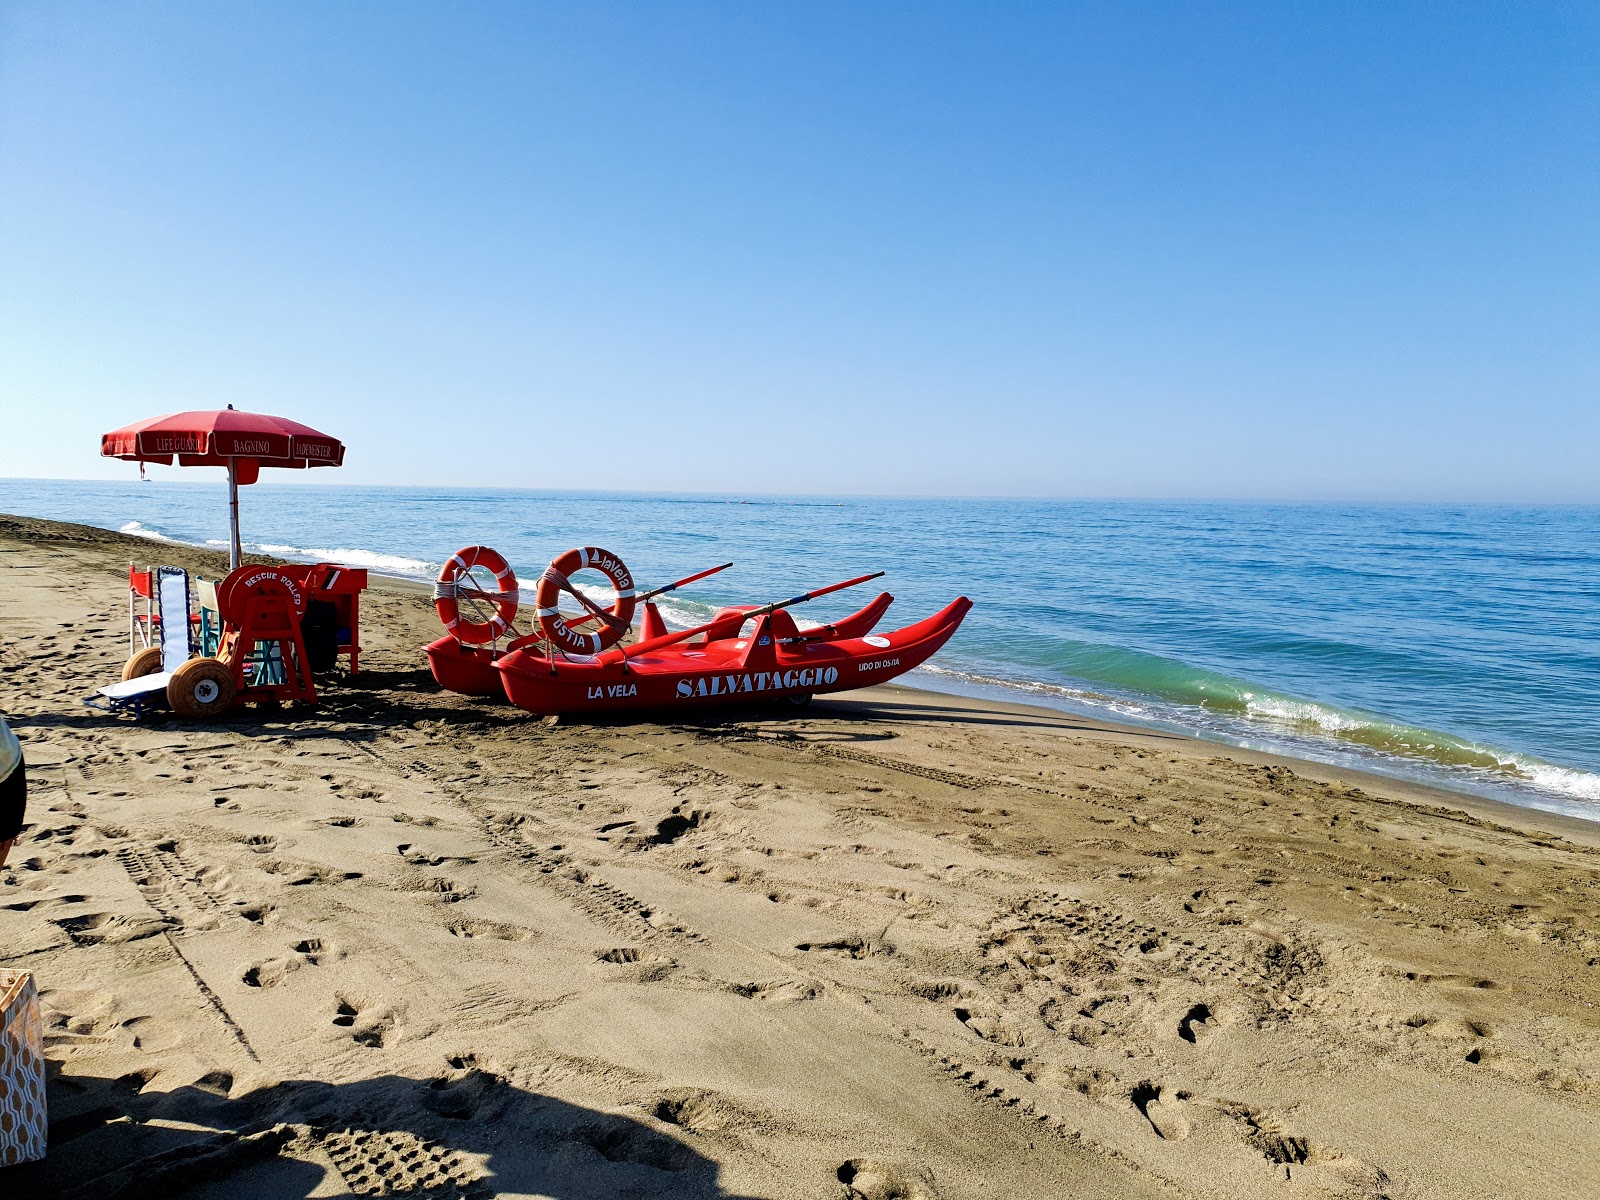 Foto von La spiaggia di Bettina mit türkisfarbenes wasser Oberfläche